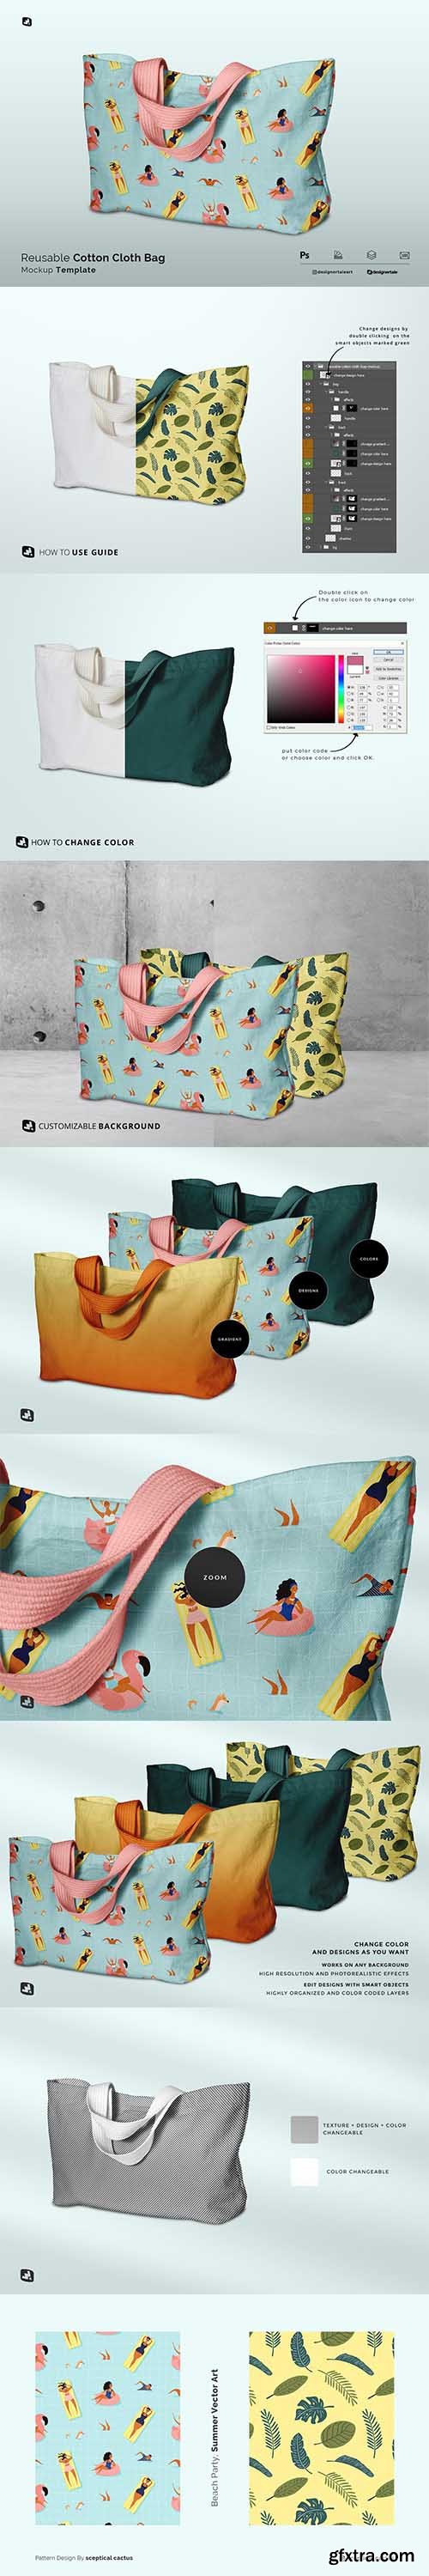 CreativeMarket - Reusable Cotton Cloth Bag Mockup 6366985